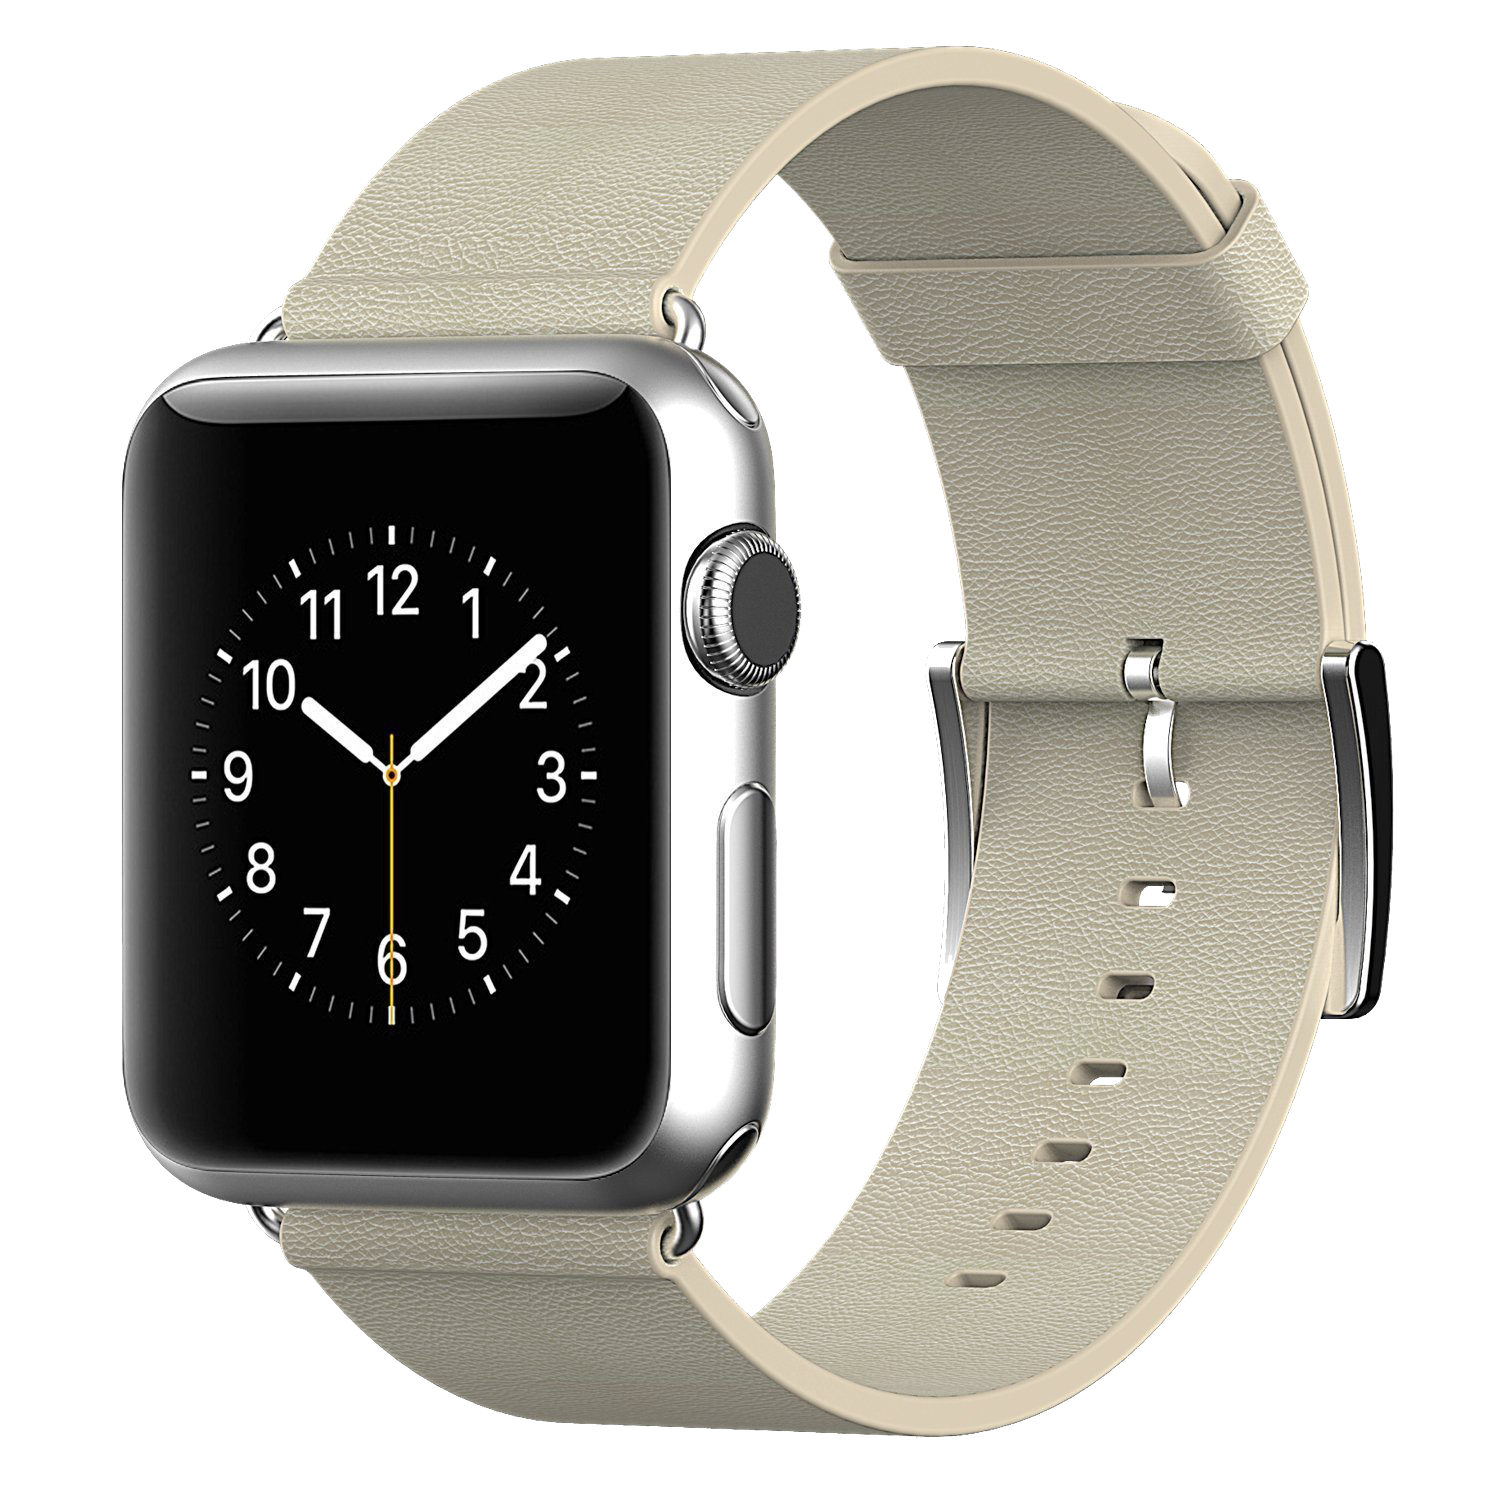 Apple Watch主题高清桌面壁纸预览 | 10wallpaper.com